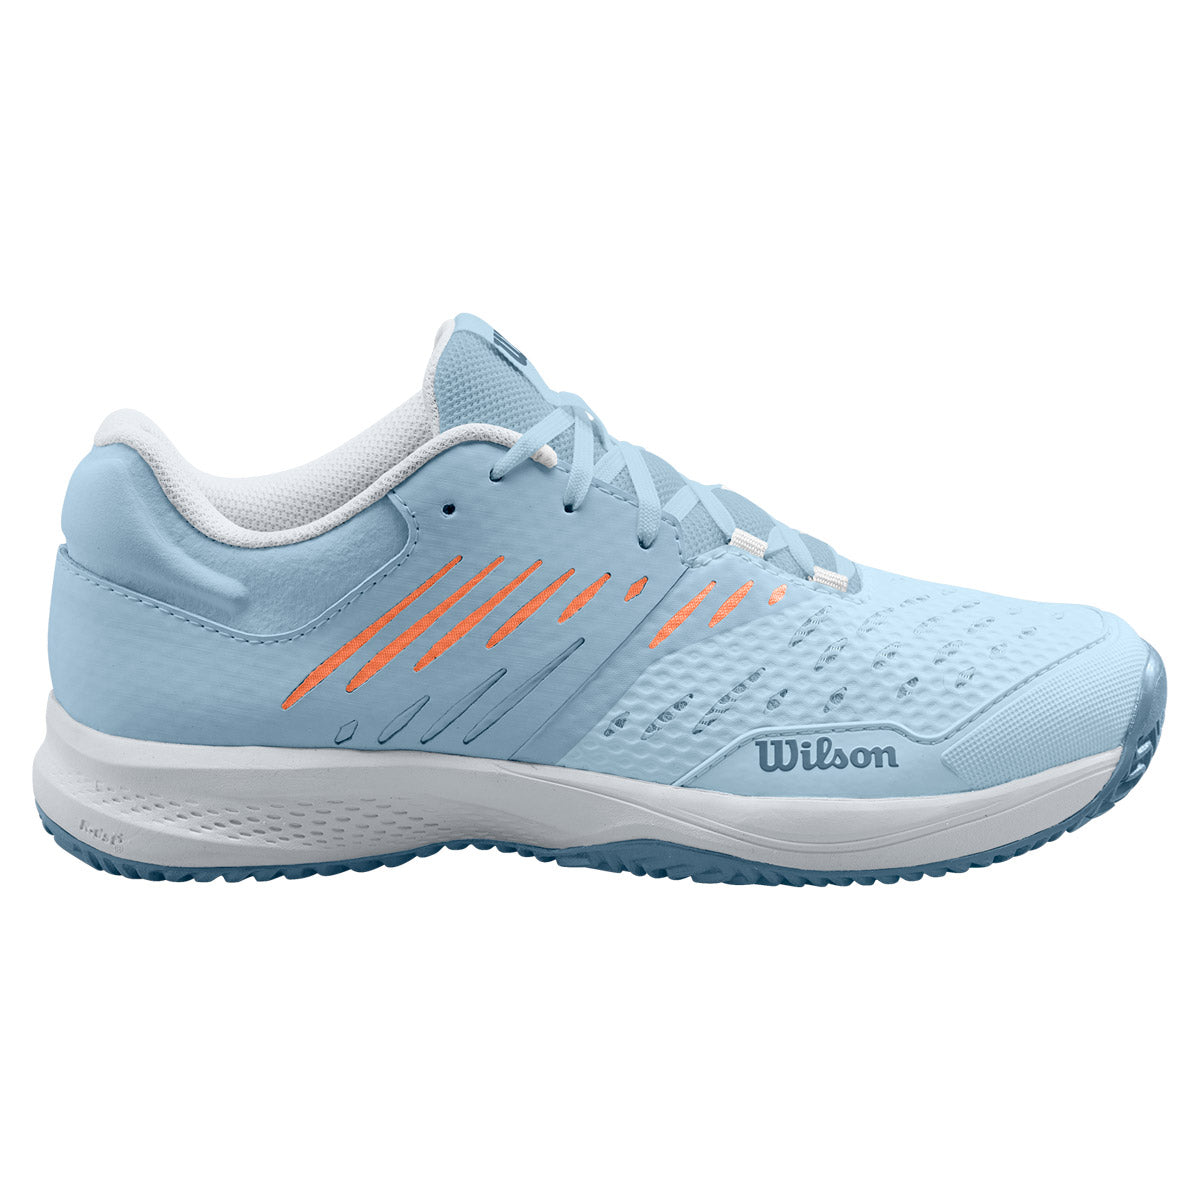 WILSON KAOS COMP 3.0 W Tennis Shoes WRS328790